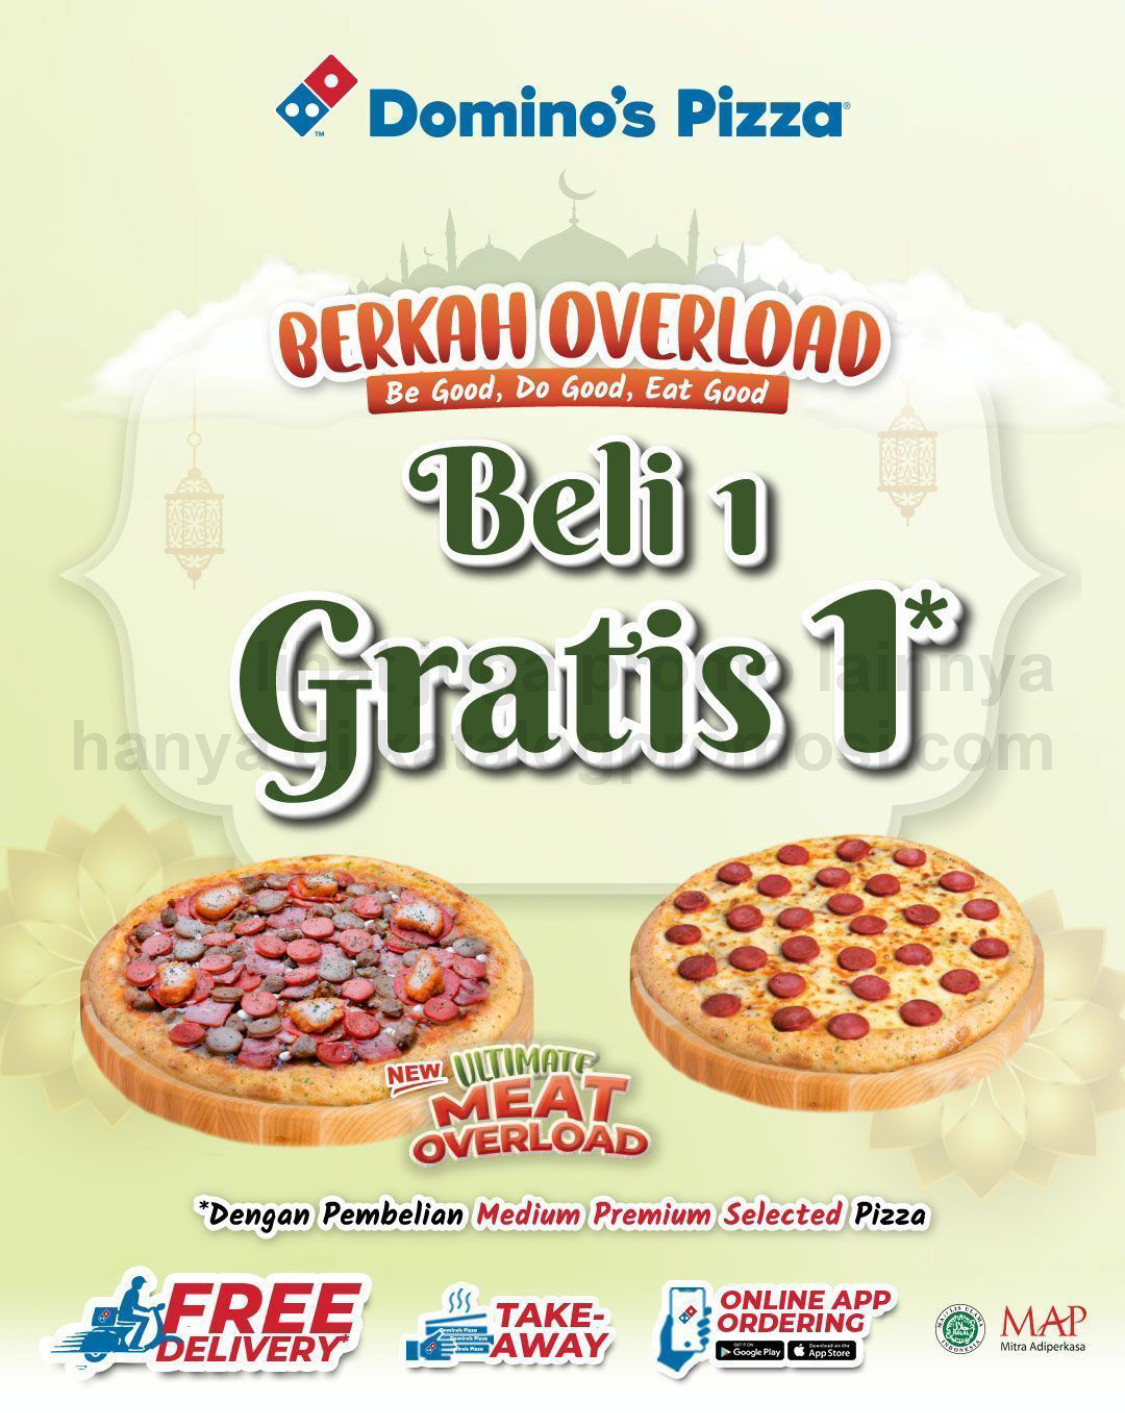 DOMINOS PIZZA Promo BERKAH OVERLOAD - BELI 1 GRATIS 1*